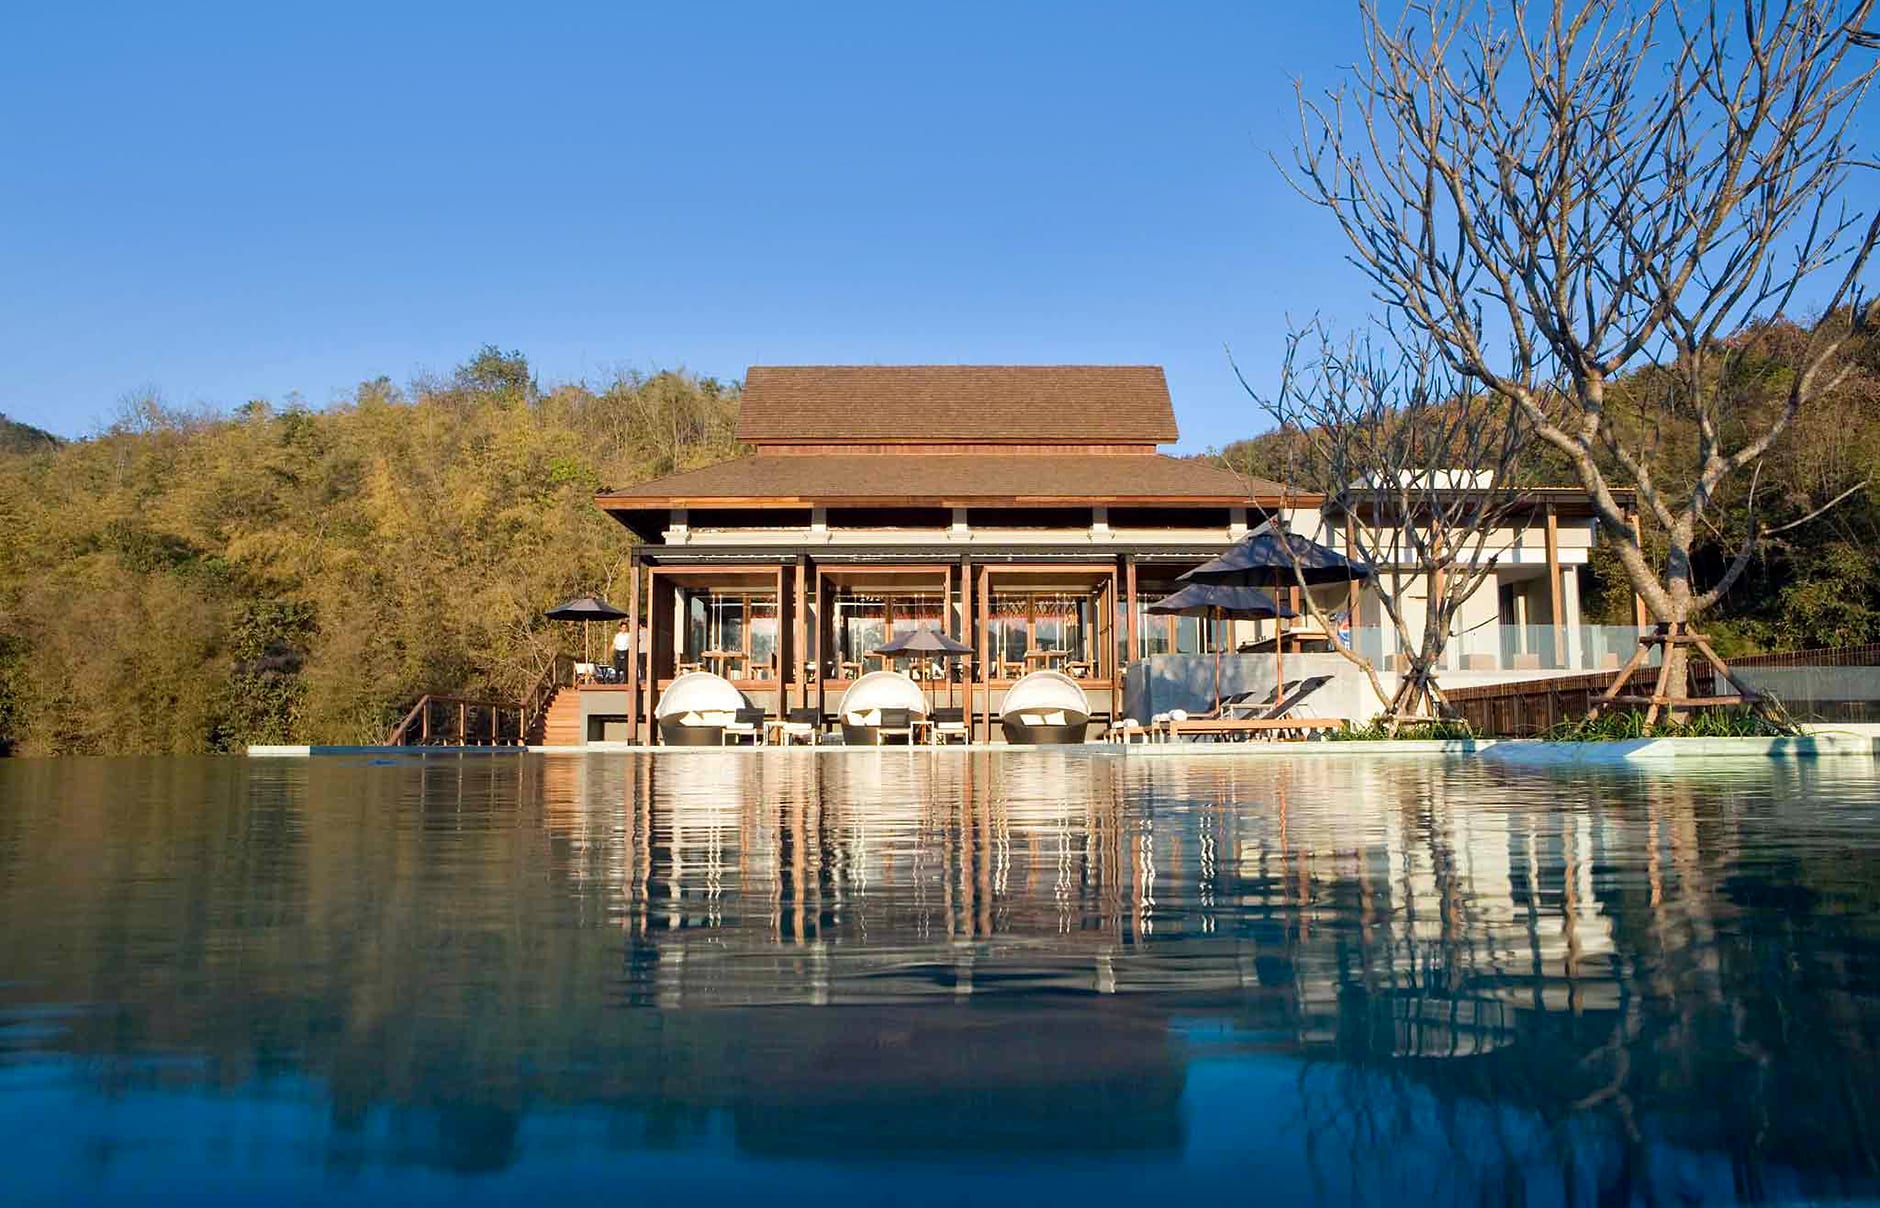 Veranda High Resort Chiang Mai, Thailand. Hotel Review by TravelPlusStyle. Photo © AccorHotels 